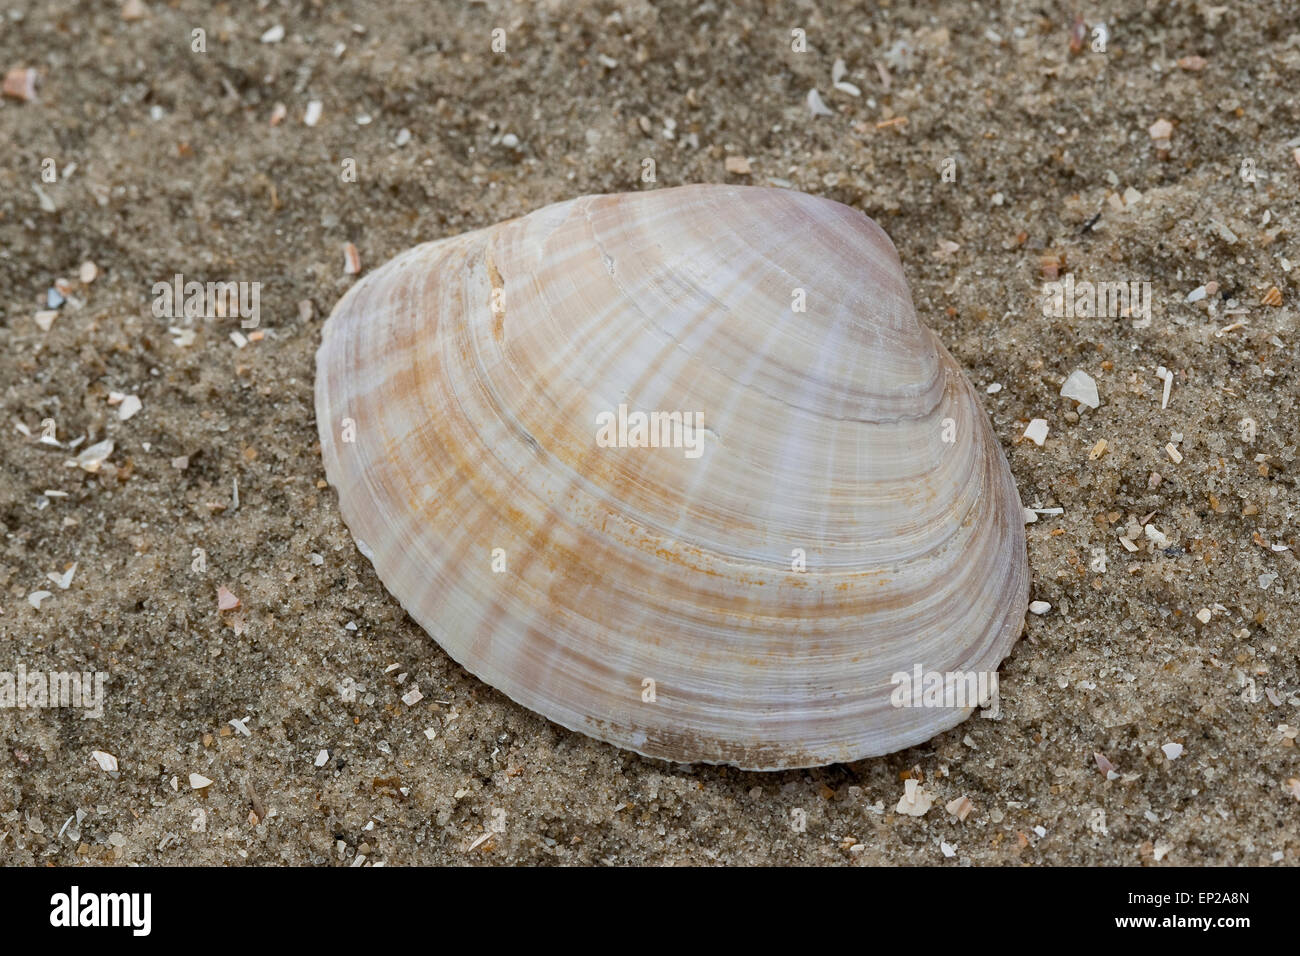 Creux blanc, clam shell, Strahlenkörbchen villeuse creux, Bunte, Trogmuschel Mactra corallina, Mactra stultorum, Mactra cinerea Banque D'Images